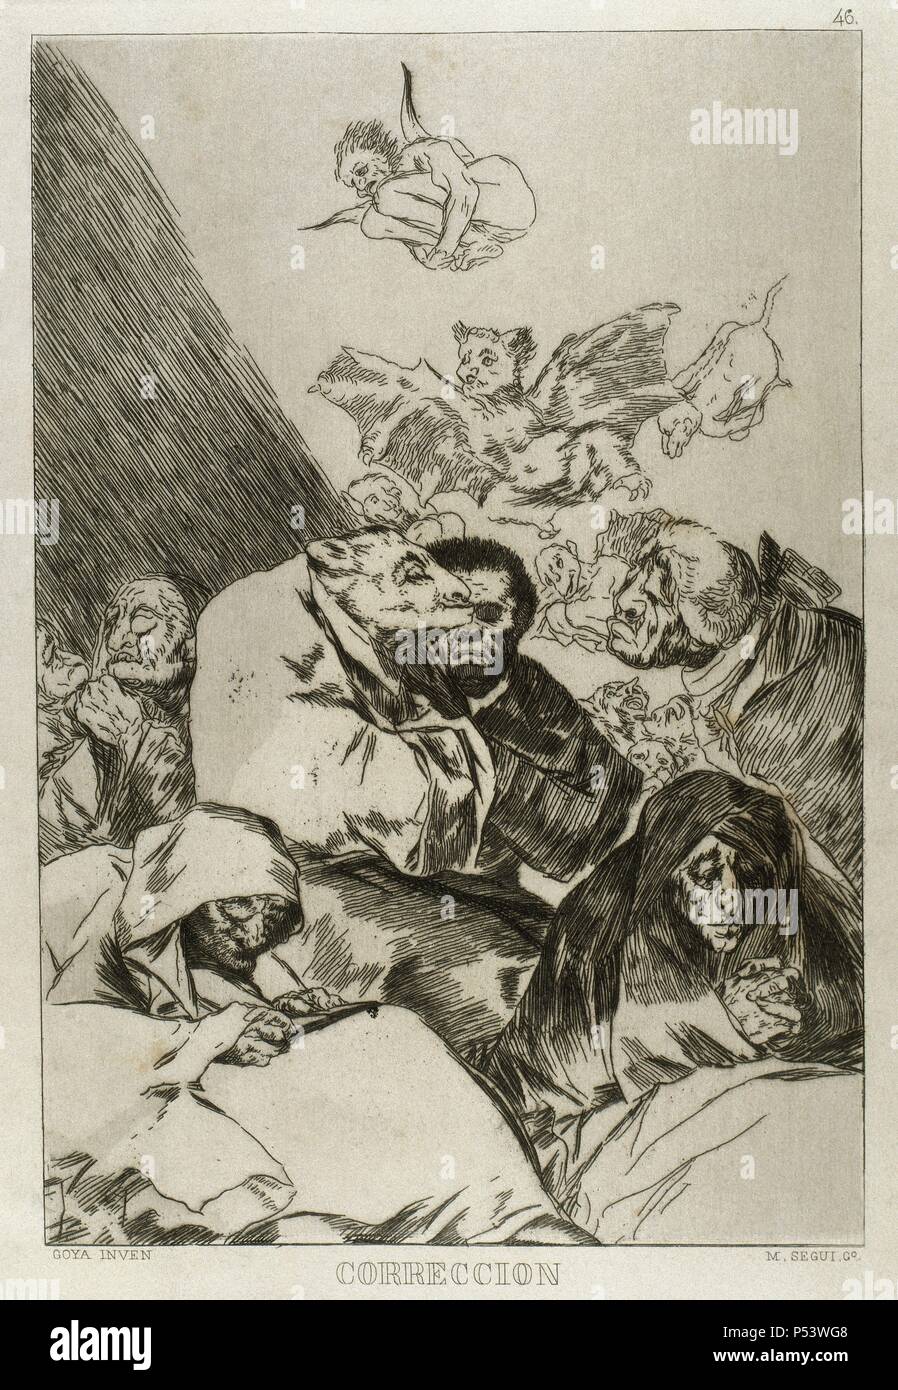 Francisco de Goya (1746-1828). Spanish painter and printmaker. Los Caprichos. Correccion (Correction). Number 46. Aquatint. 1799. Reproduction by M. Segui i Riera. Stock Photo